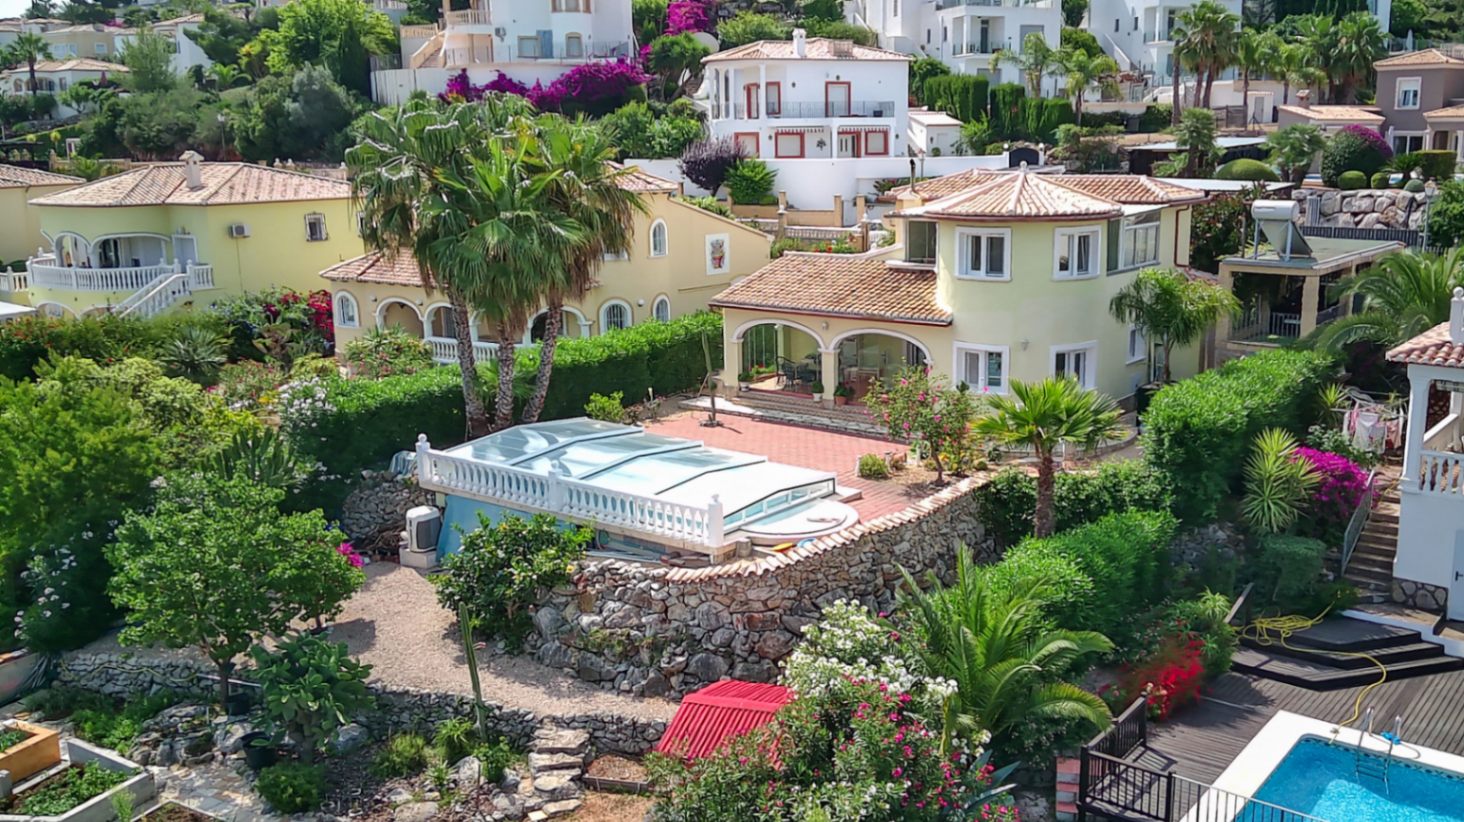 Villa with sea views for sale in Orba